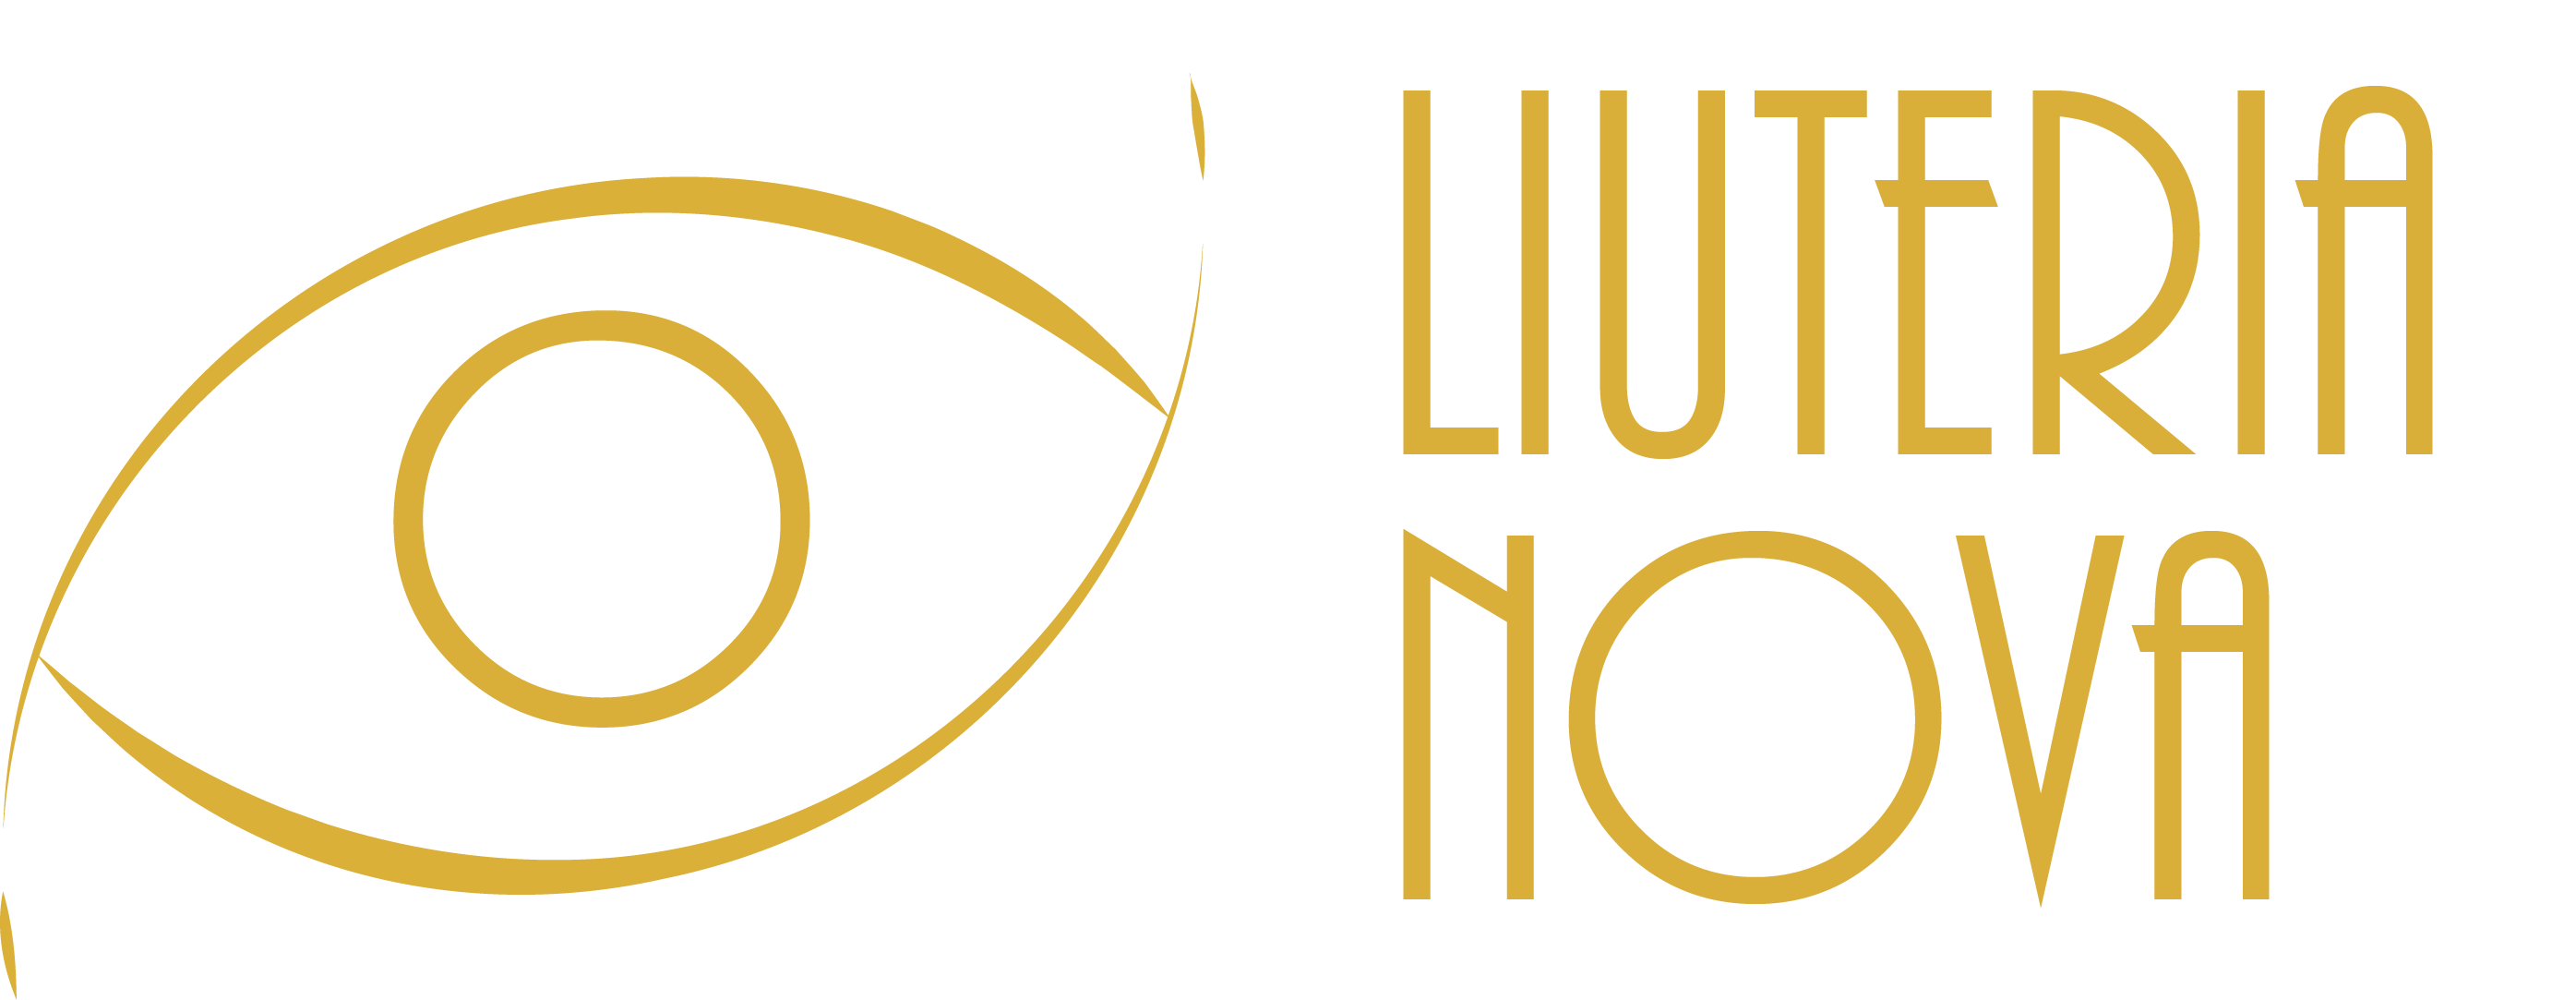 Liuteria Nova web logo